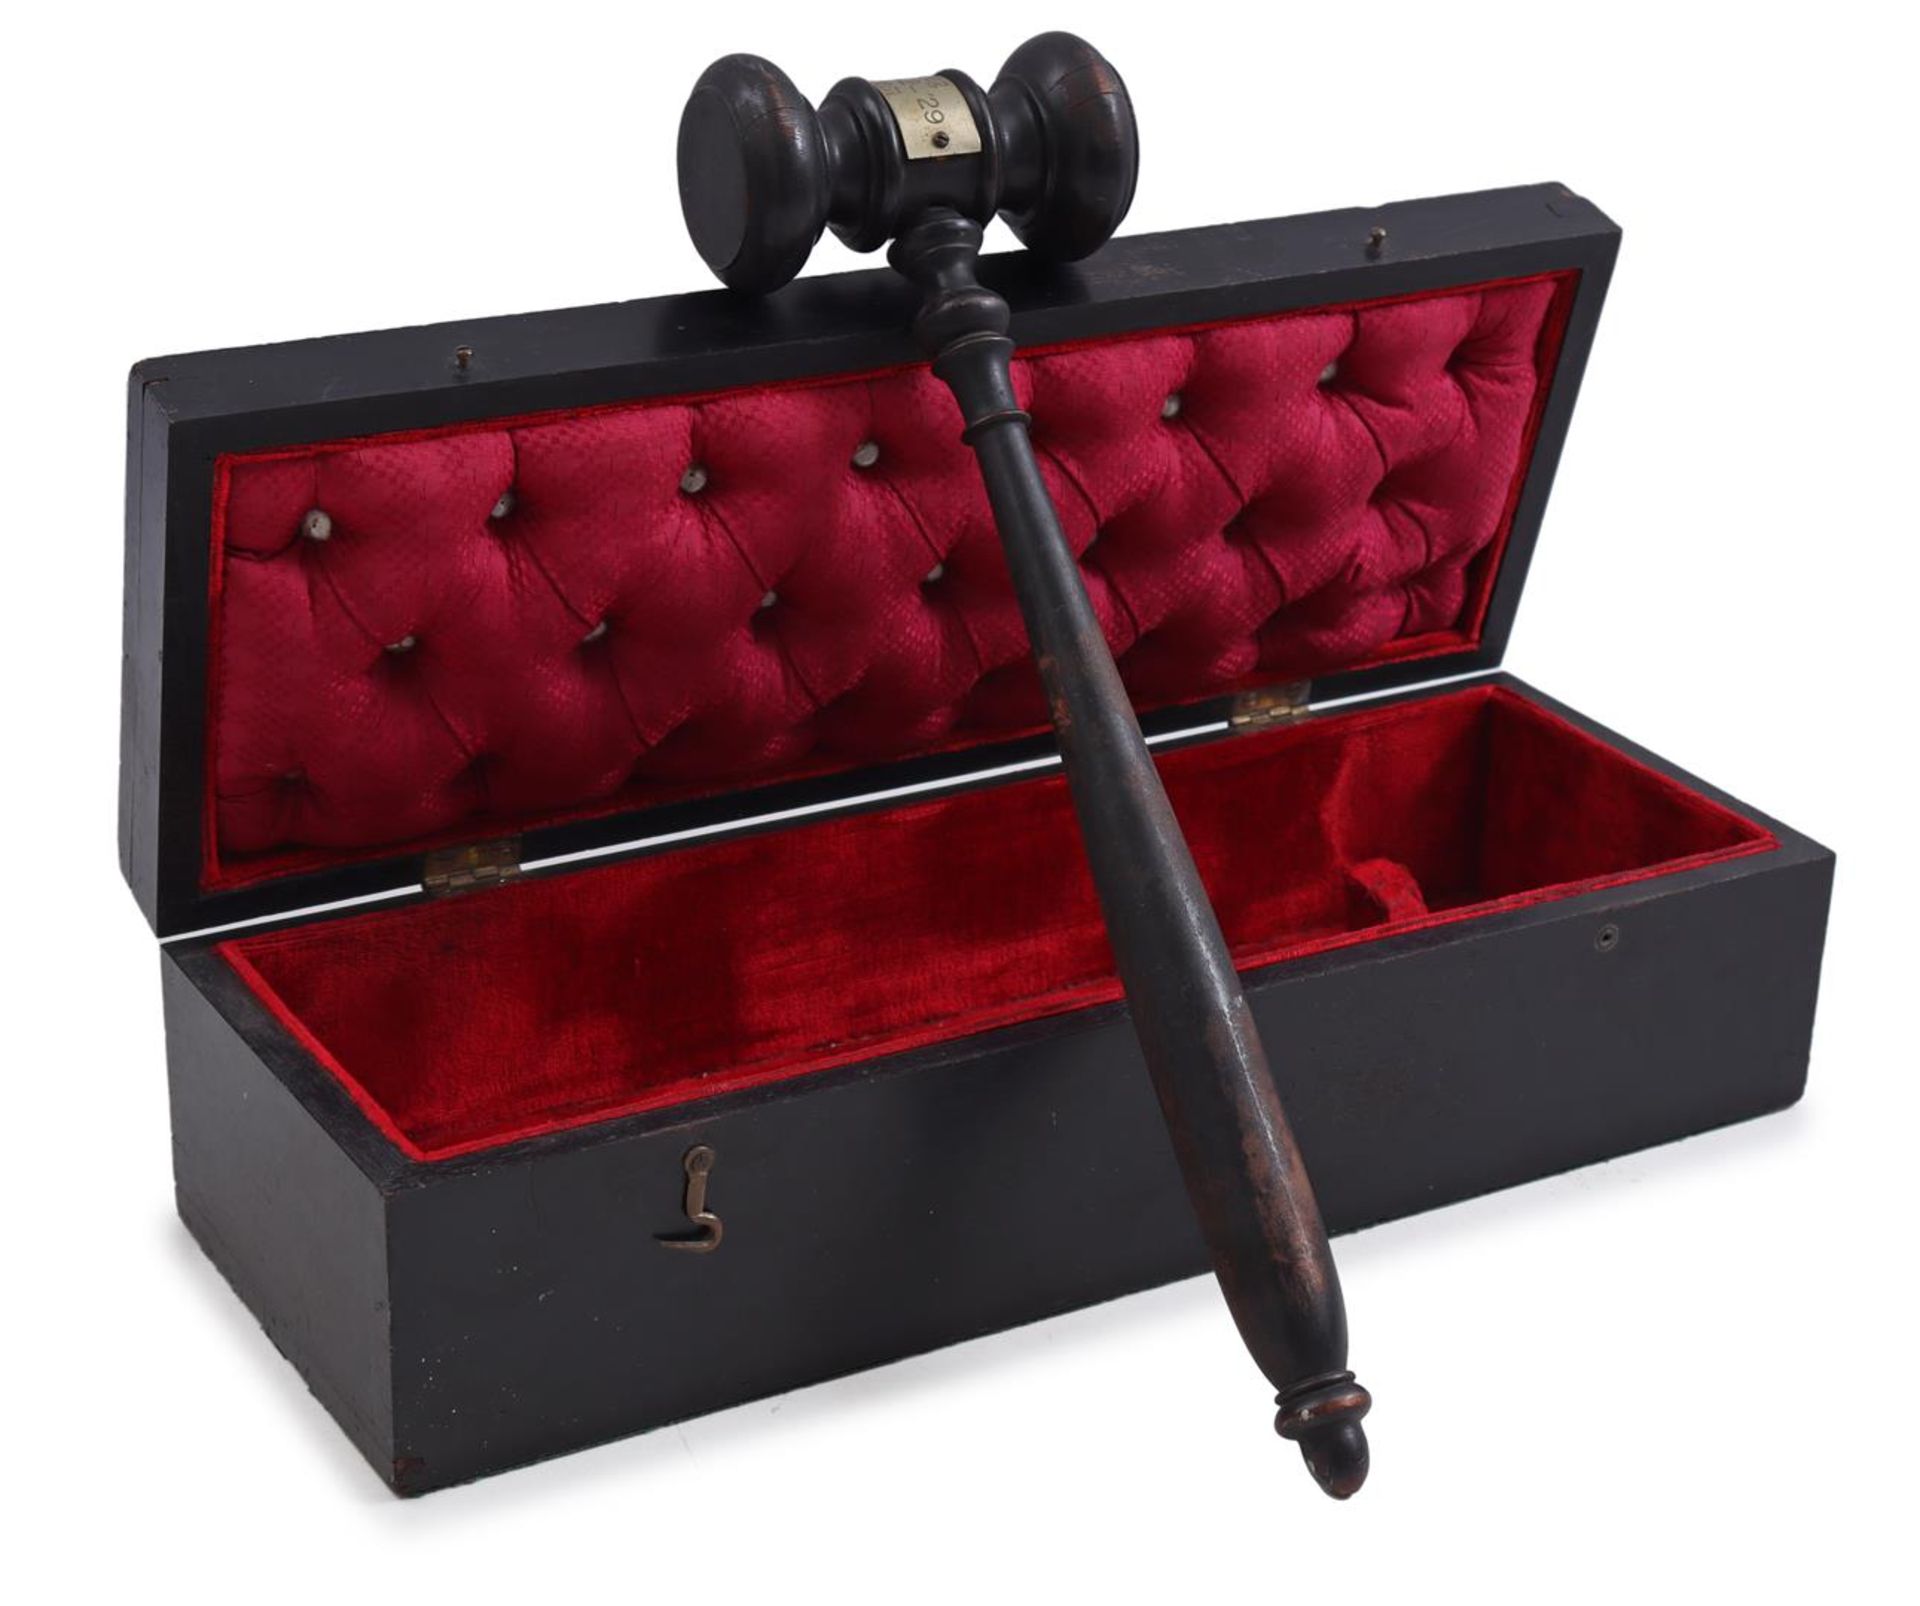 Blackened wooden gavel in accompanying box